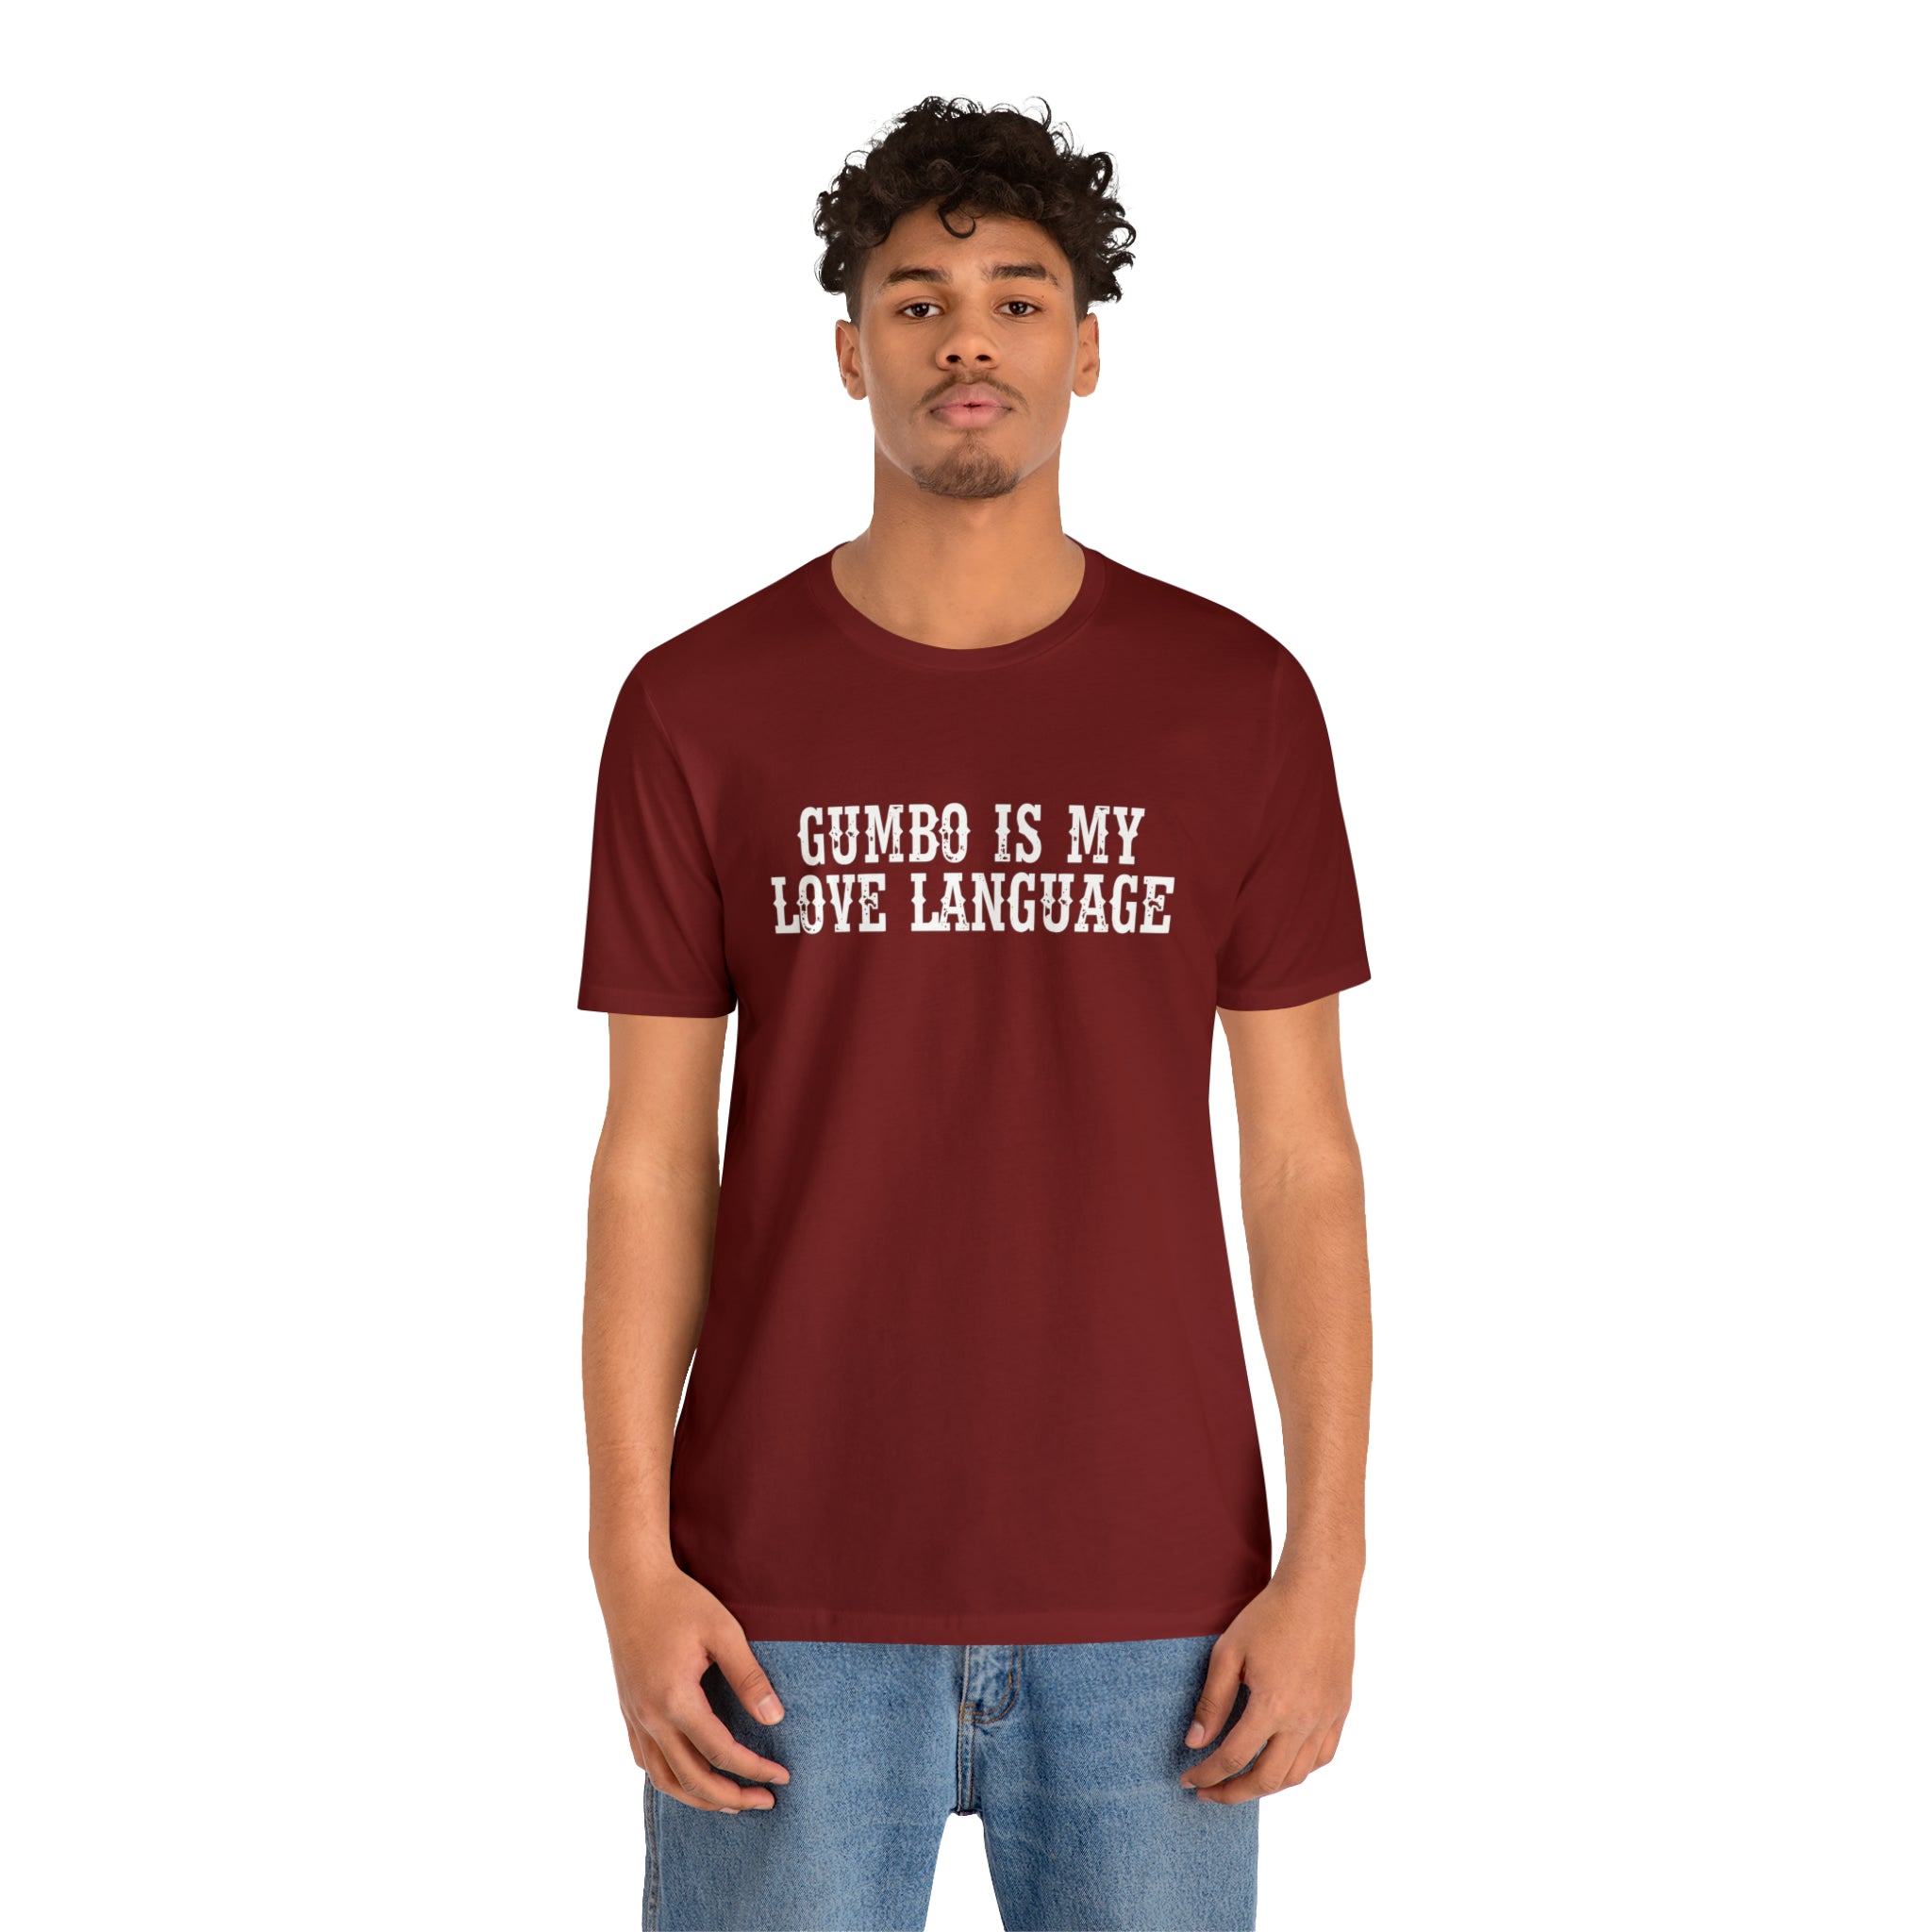 Gumbo Love Language Tee